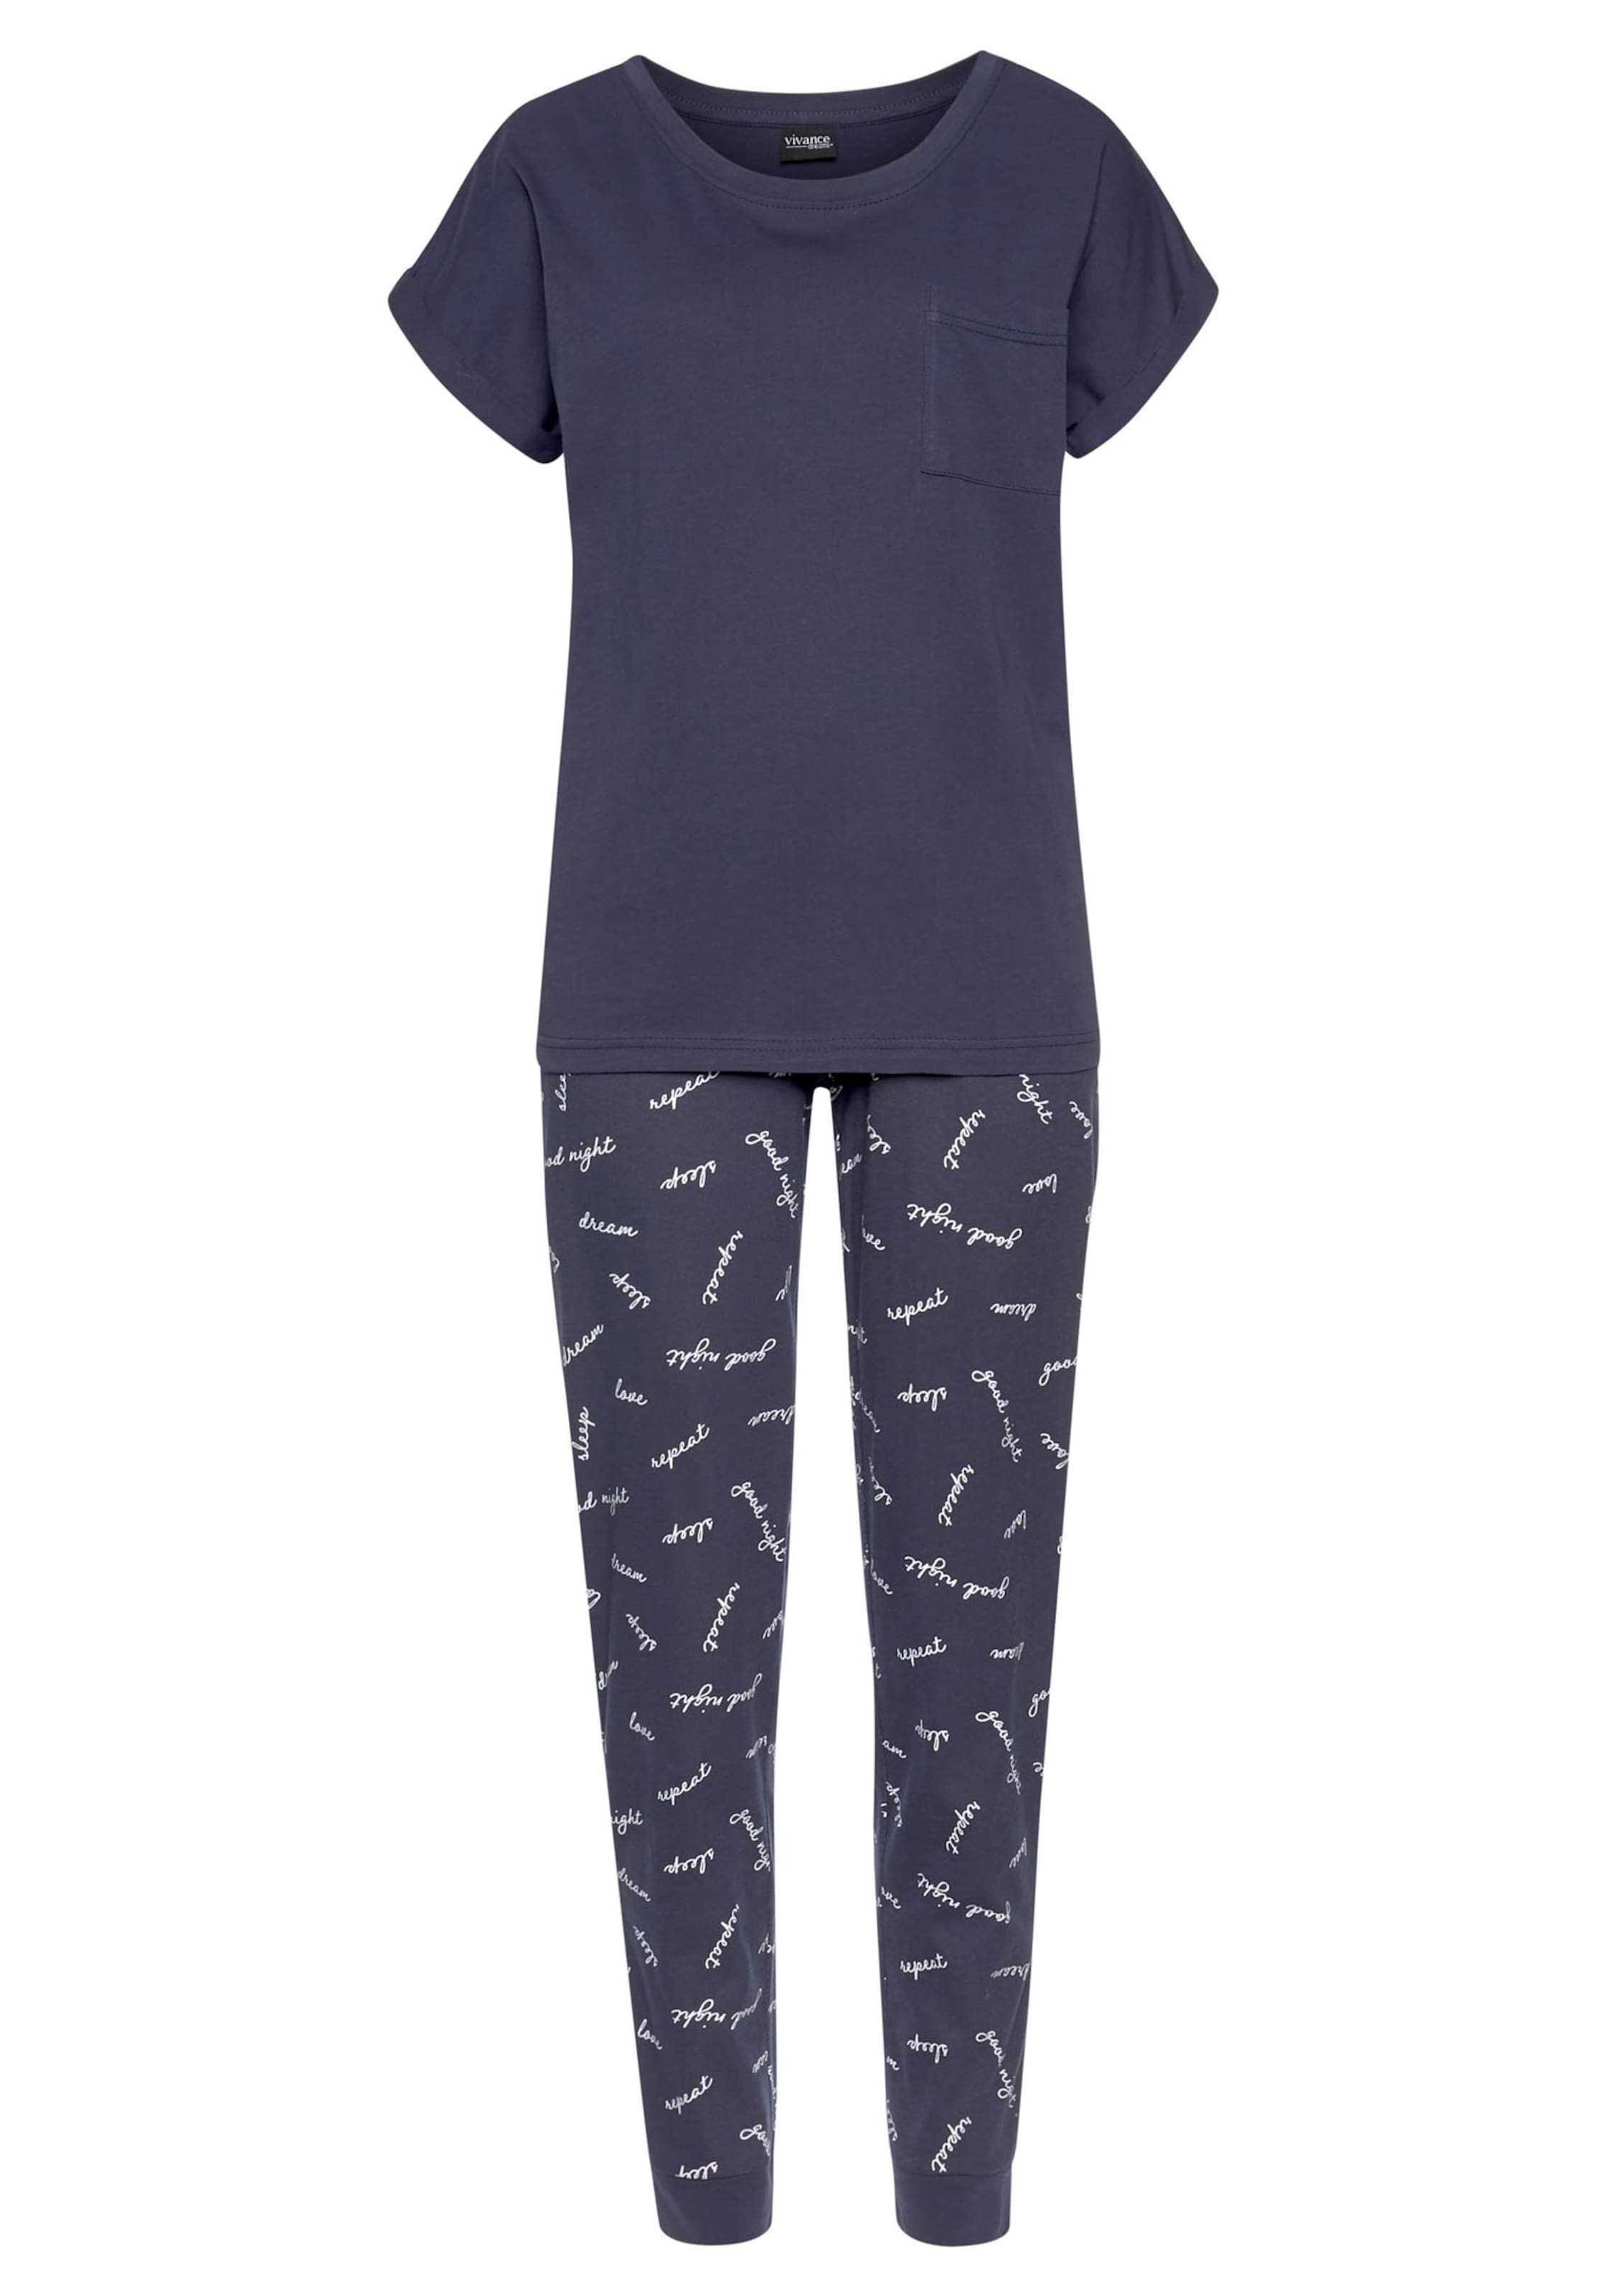 Damenmode Nachtwäsche & Homewear Vivance Dreams Pyjama in blau-pink-gemustert 